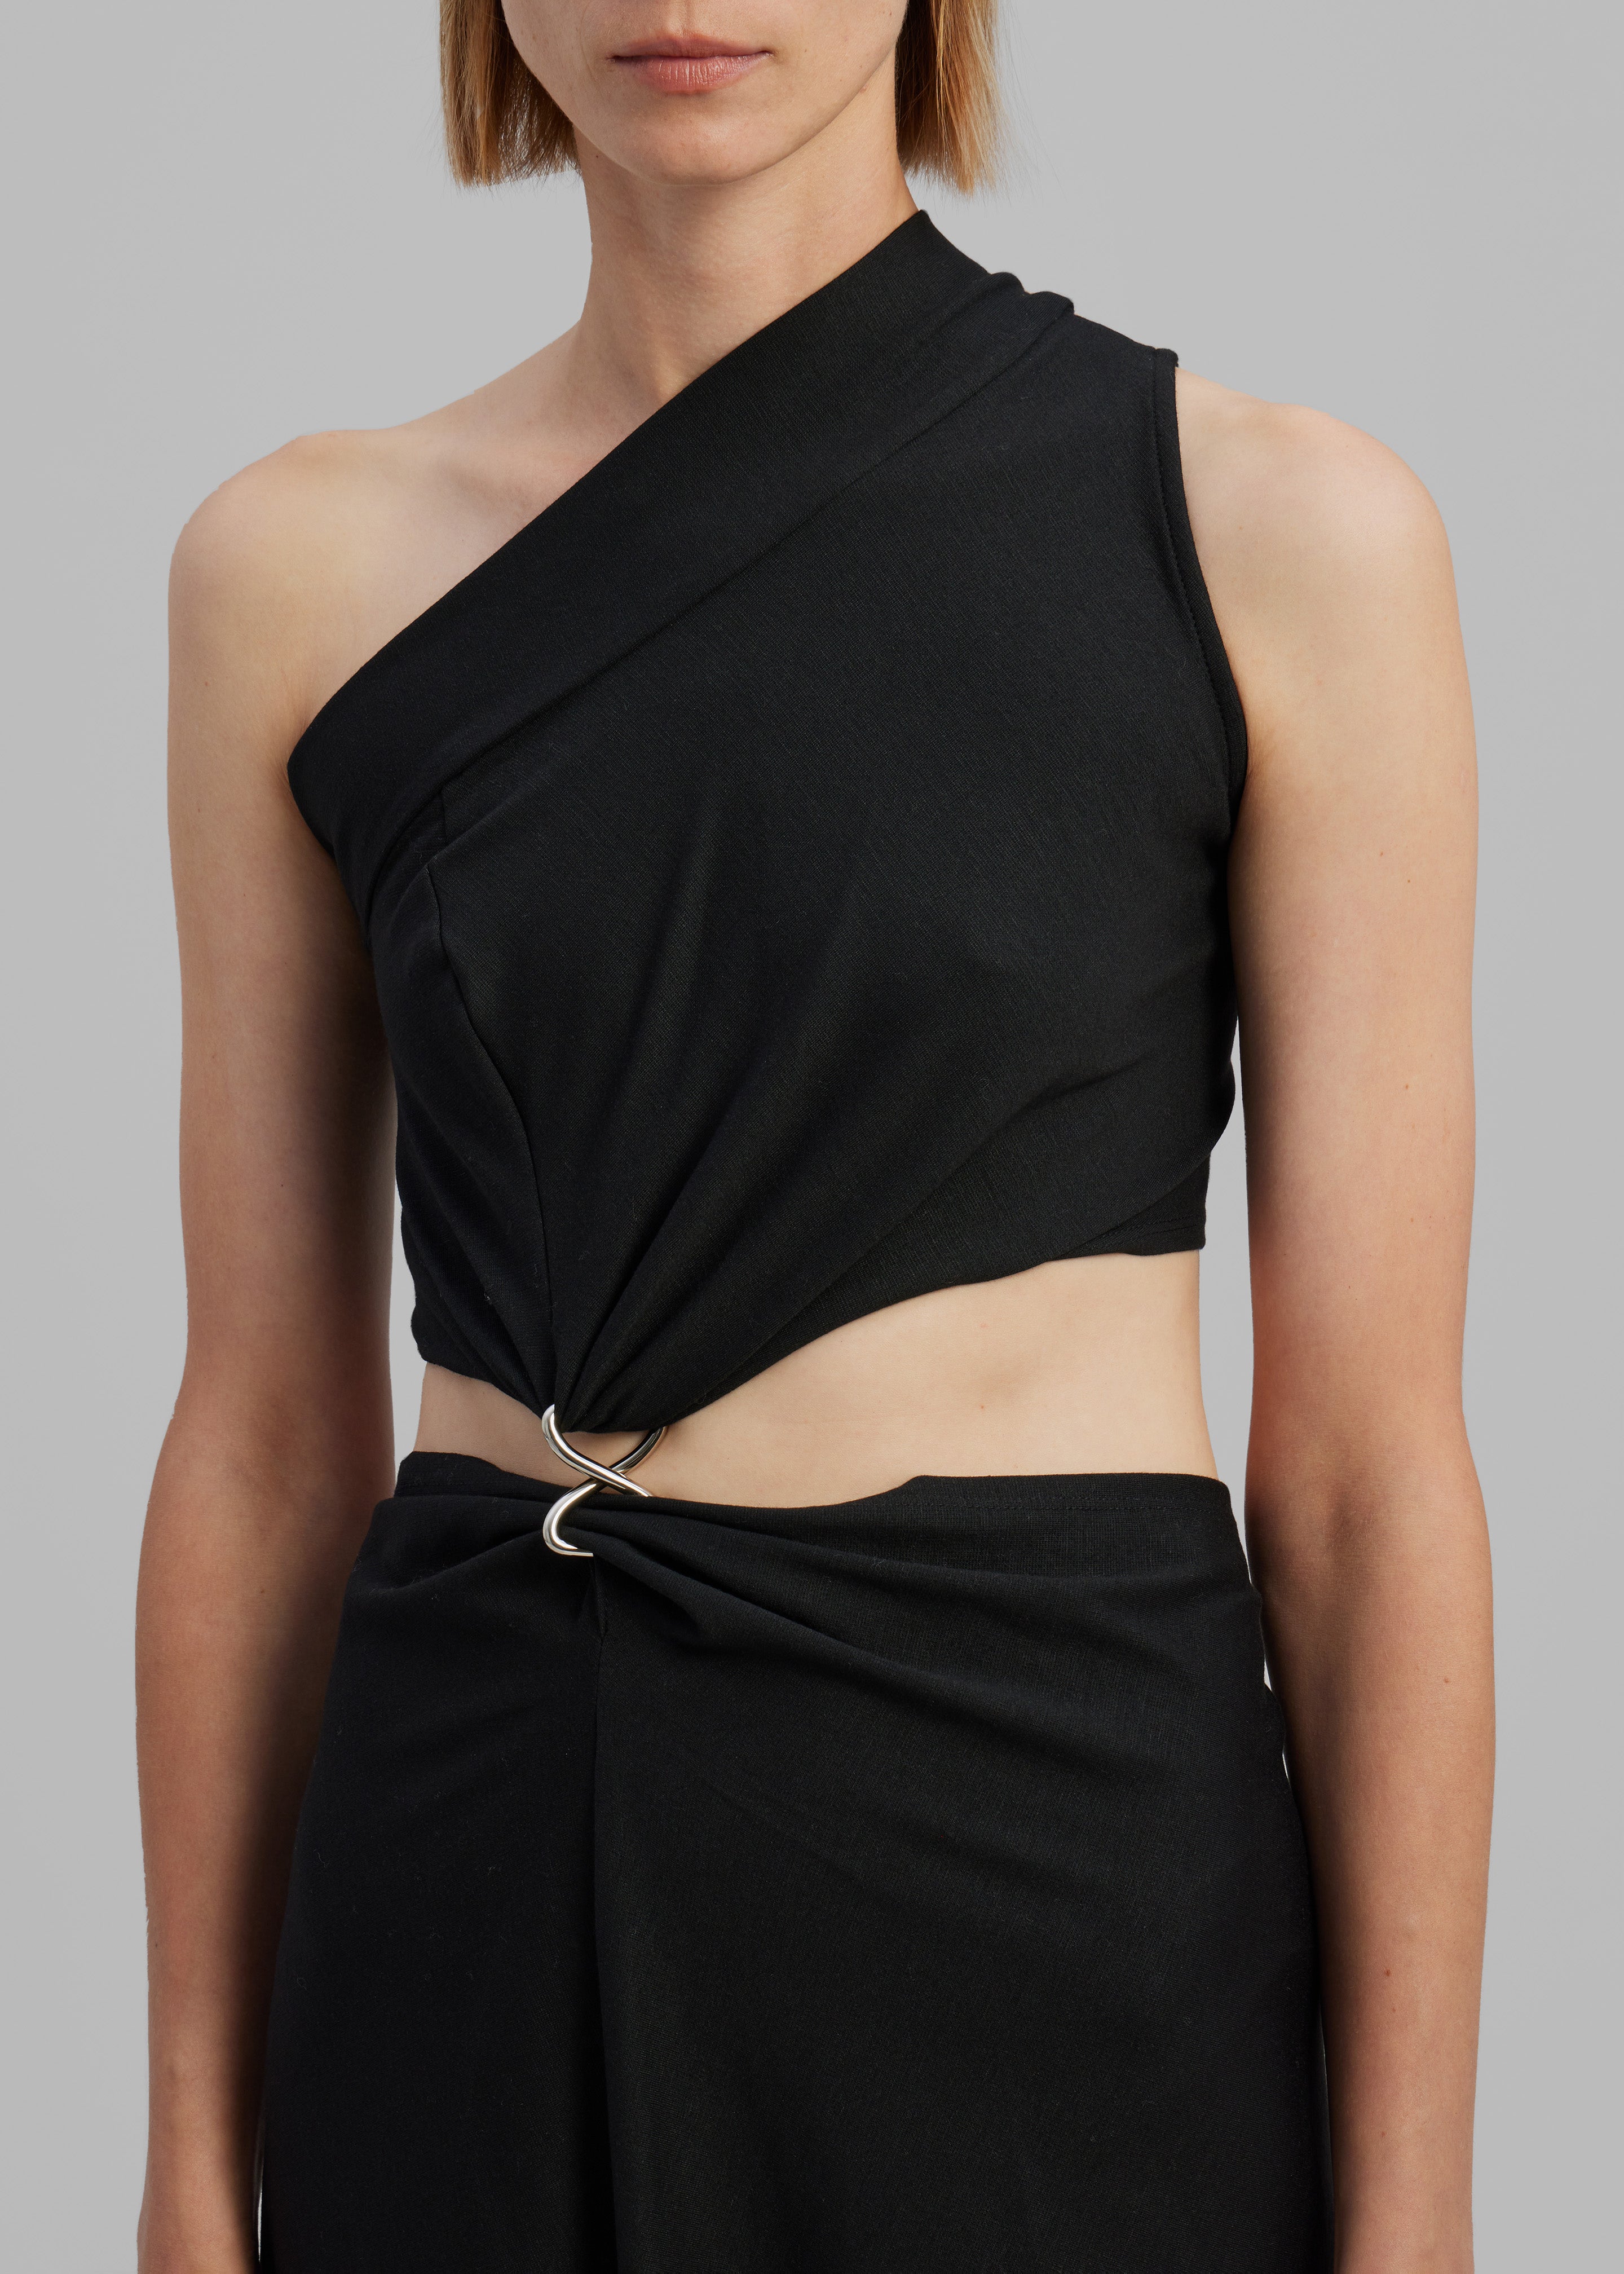 Sid Neigum Knit One-Shoulder Strap Dress W Hardware Detail - Black - 7